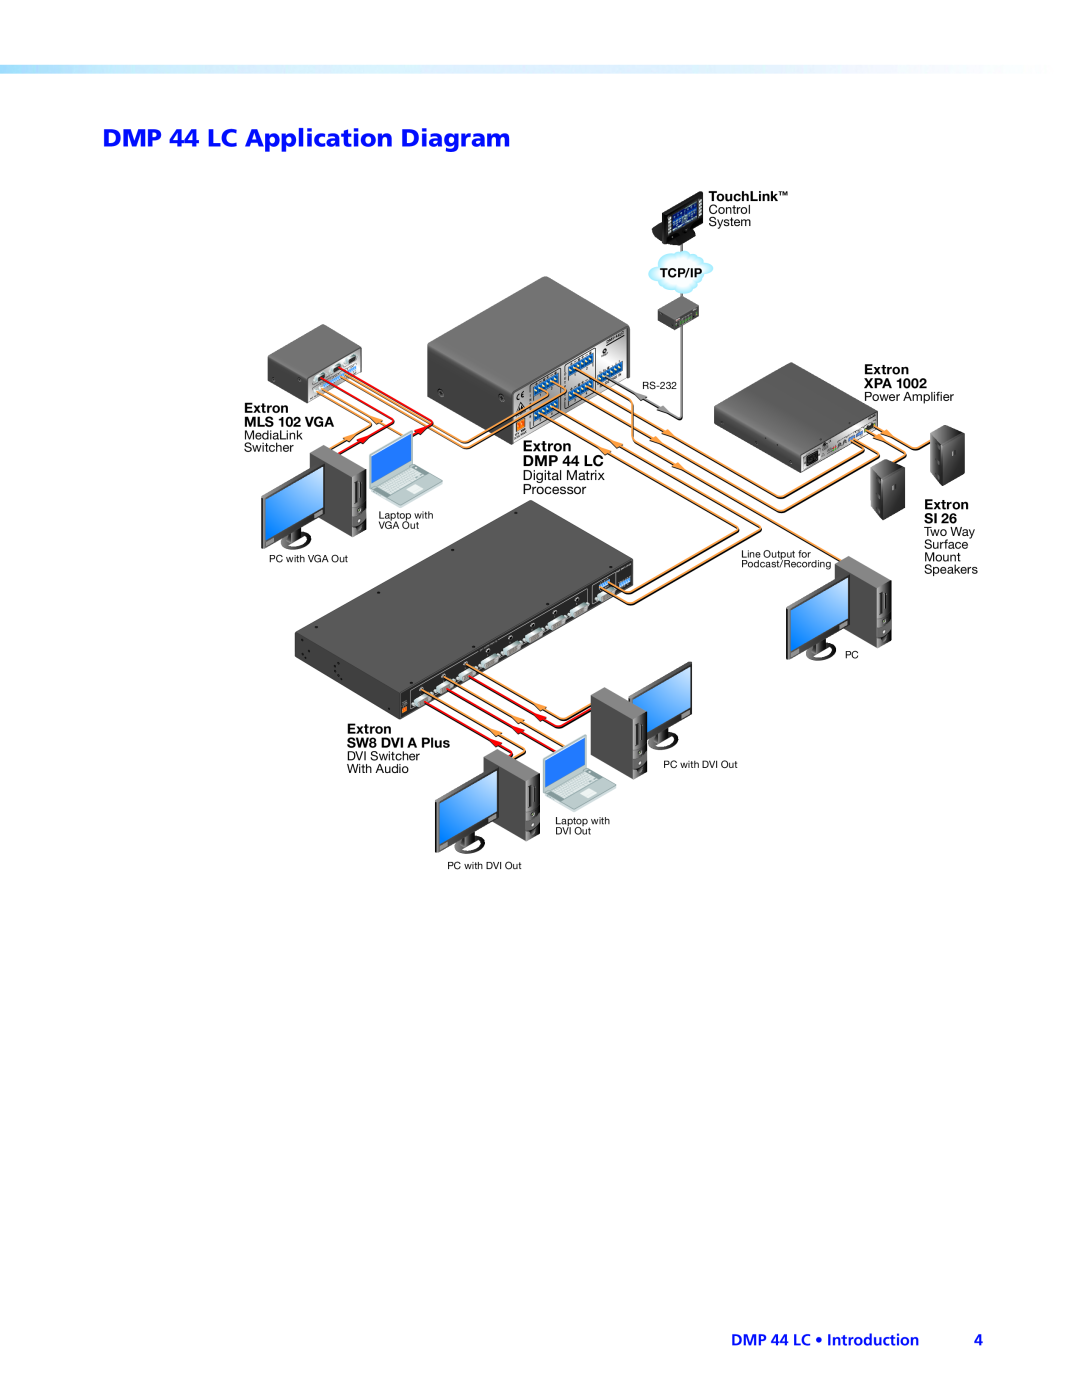 Extron electronic DMP 44 LC Application Diagram, DMP 44 LC • Introduction, TouchLink, Extron MLS 102 VGA, Processor 